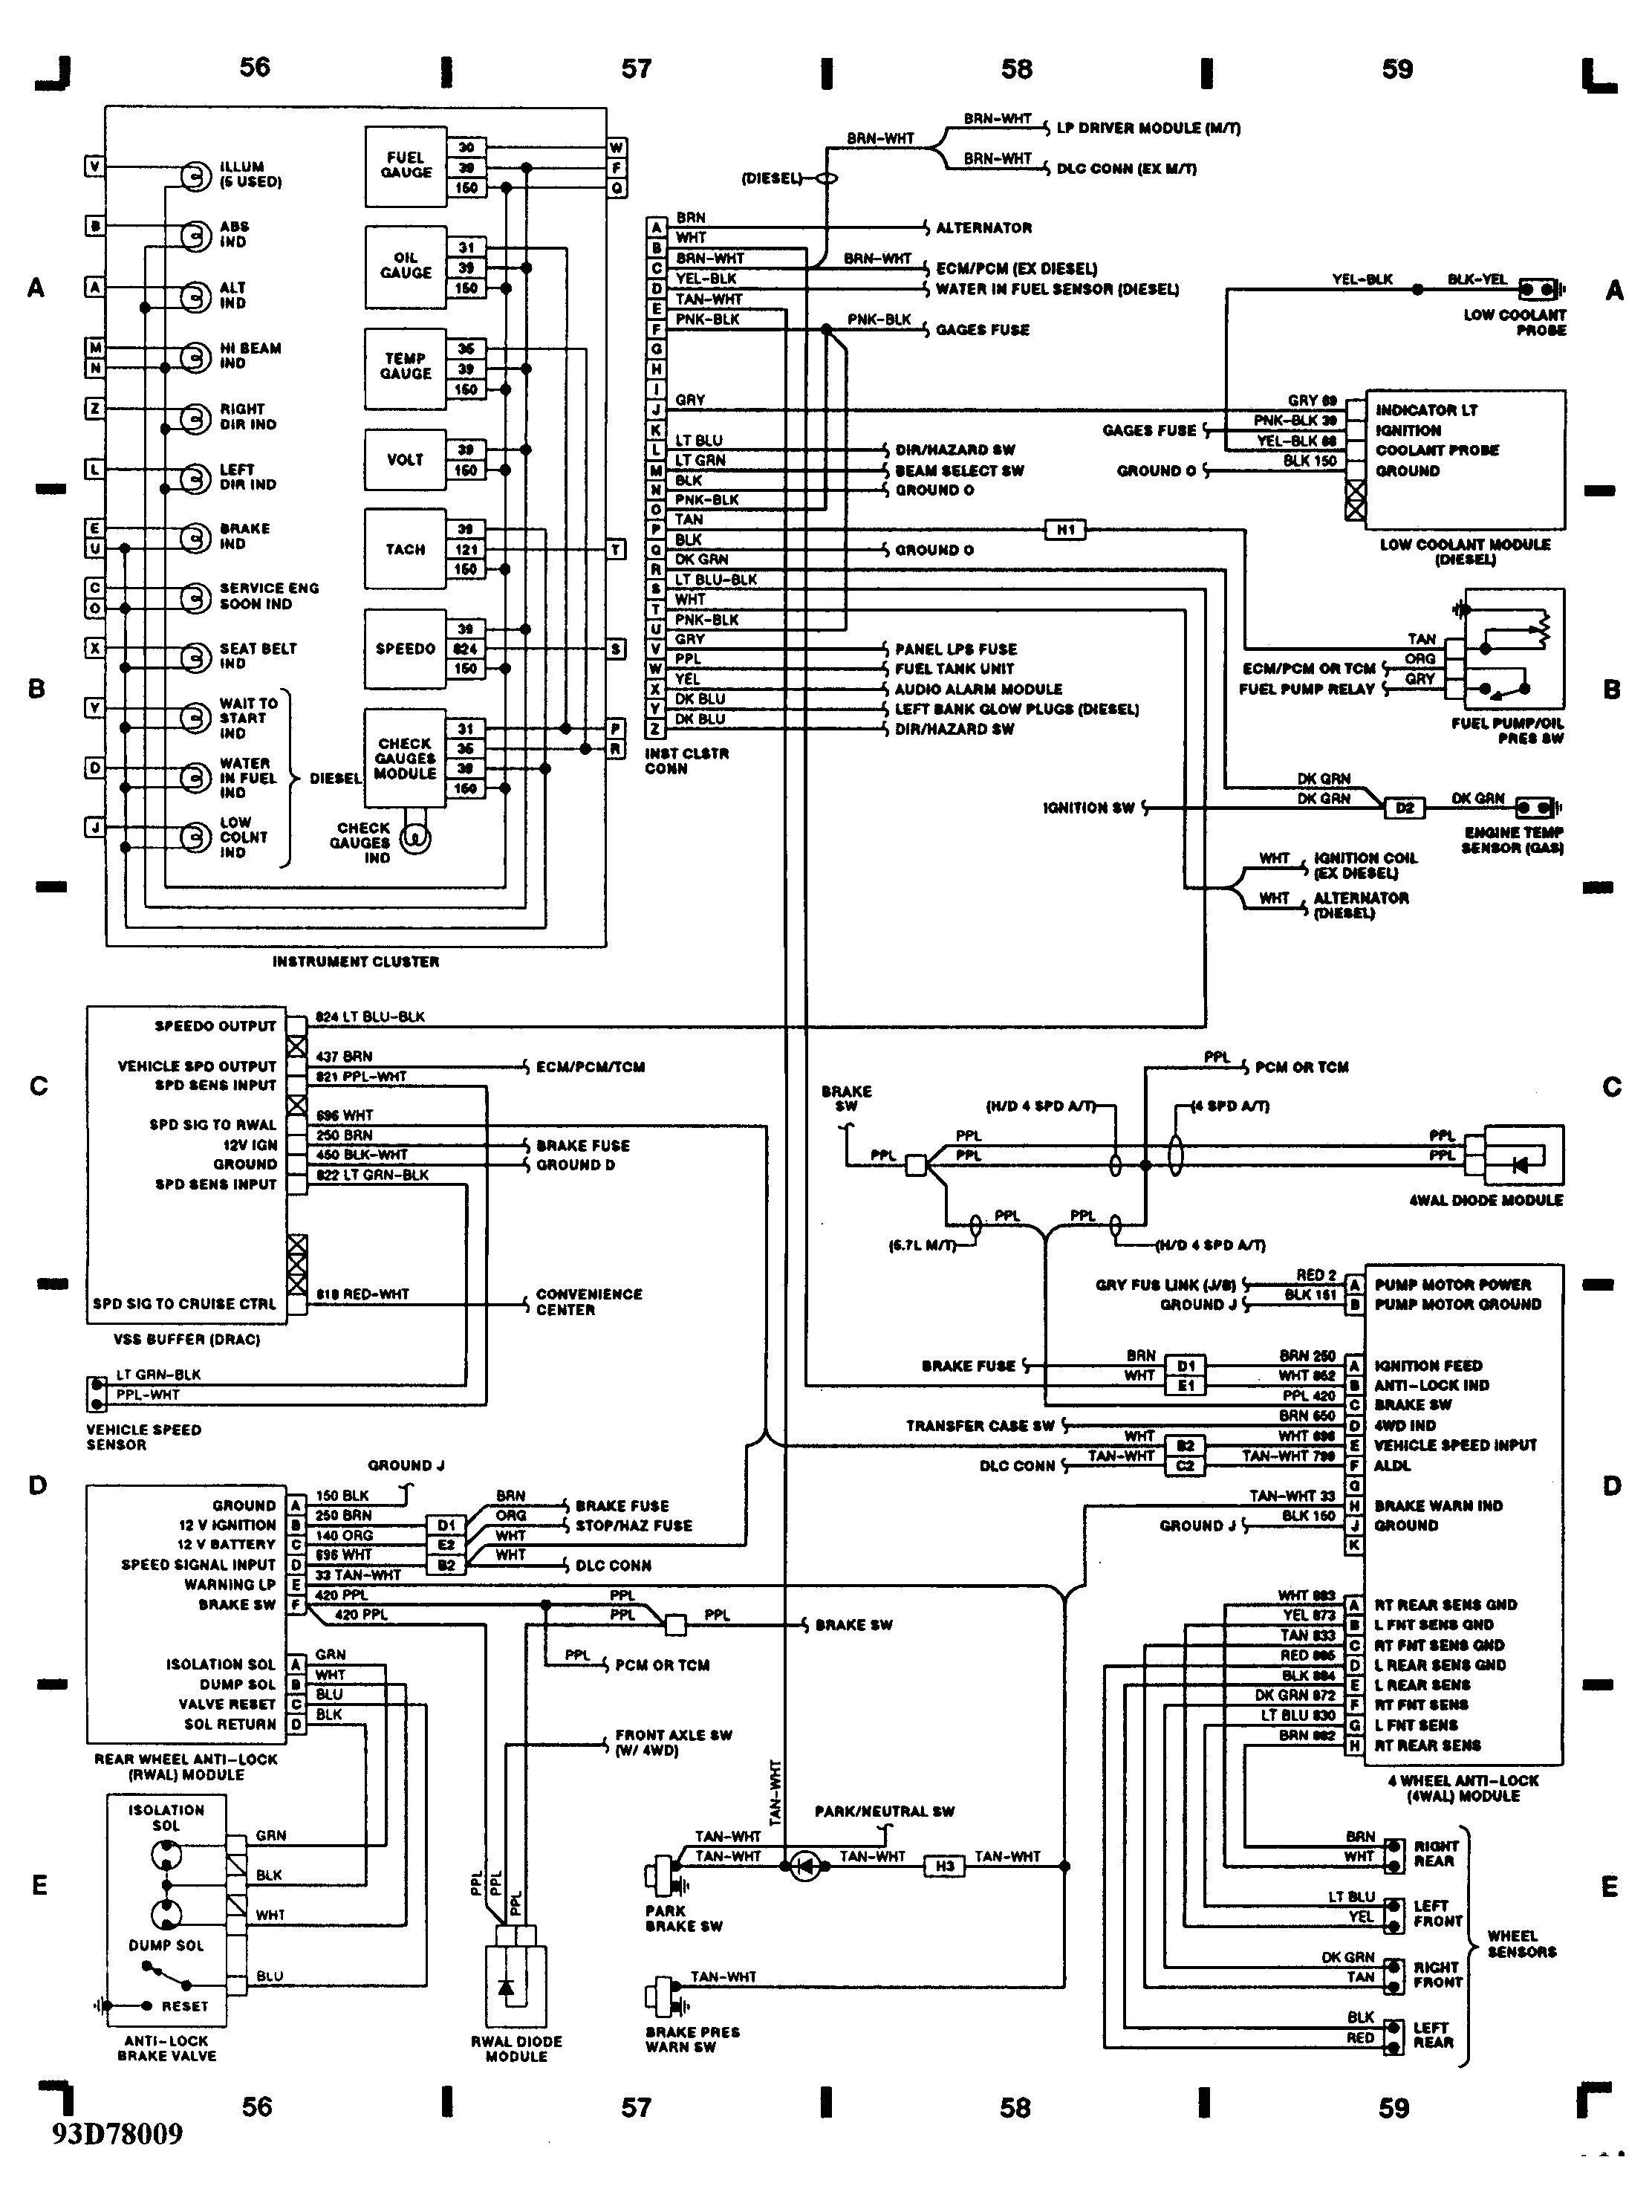 chevrolet transmission diagrams wiring diagram operations chevrolet transmission diagrams